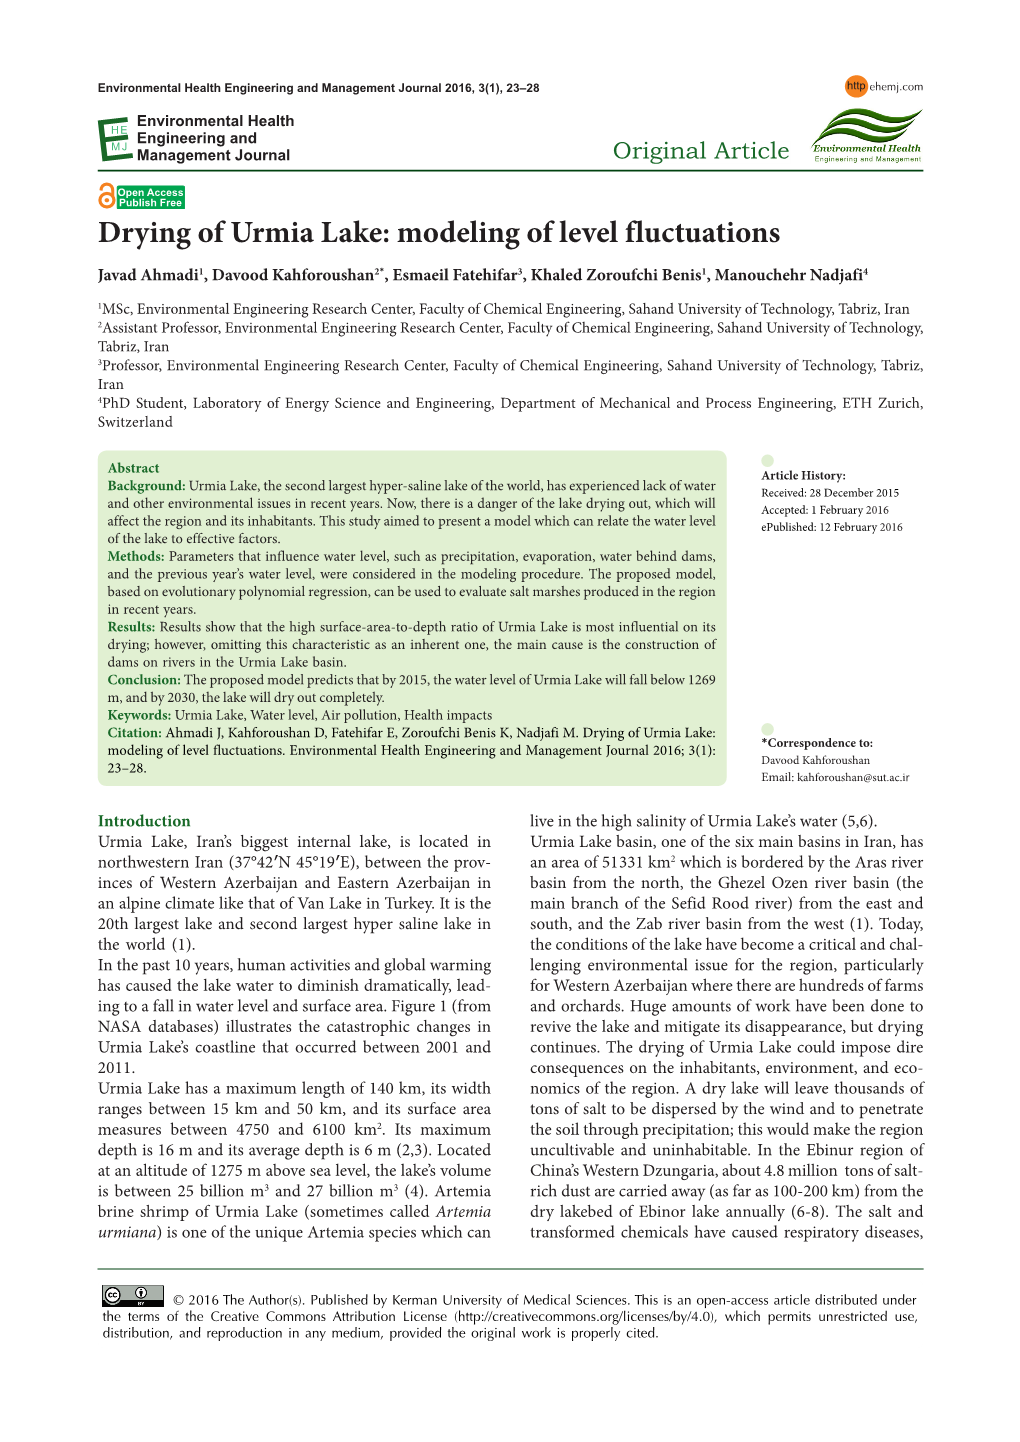 Drying of Urmia Lake: Modeling of Level Fluctuations Javad Ahmadi1, Davood Kahforoushan2*, Esmaeil Fatehifar3, Khaled Zoroufchi Benis1, Manouchehr Nadjafi4